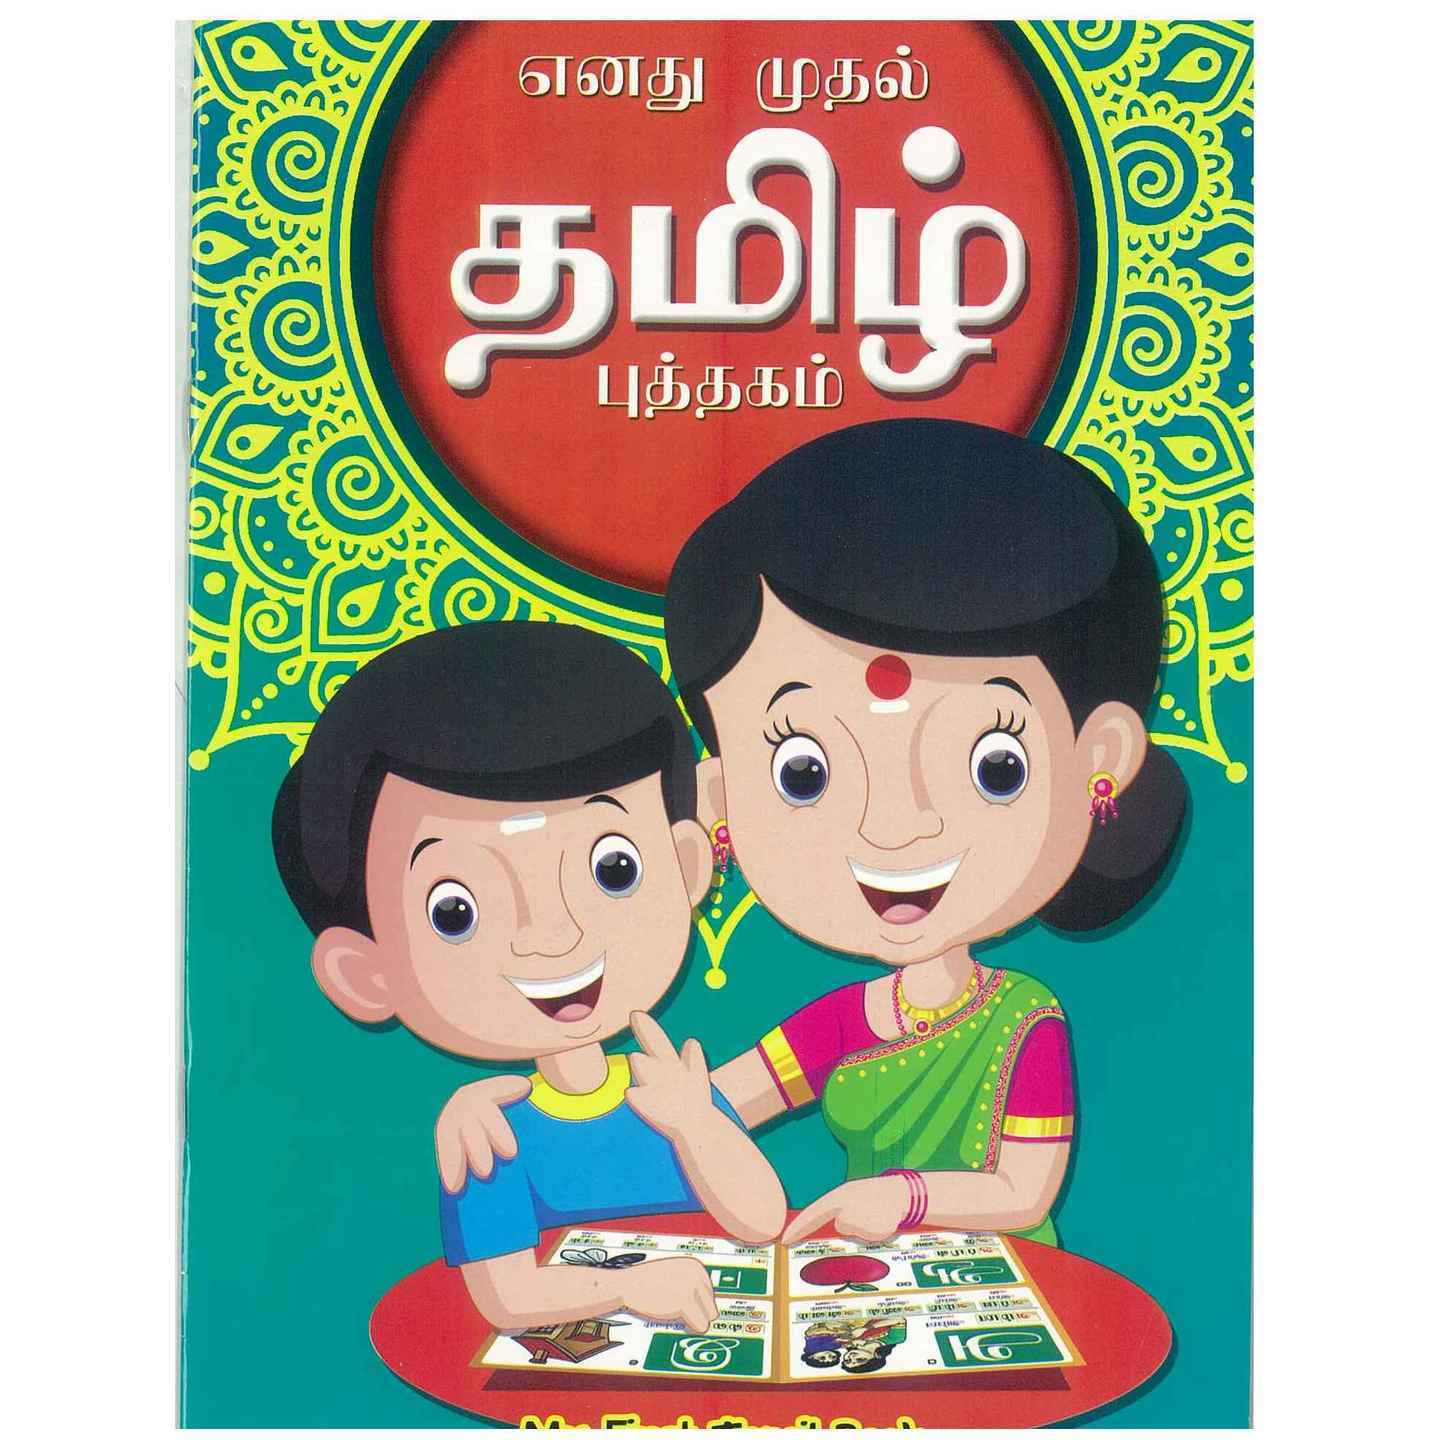 Tamil Vocabulary for Preschoolers